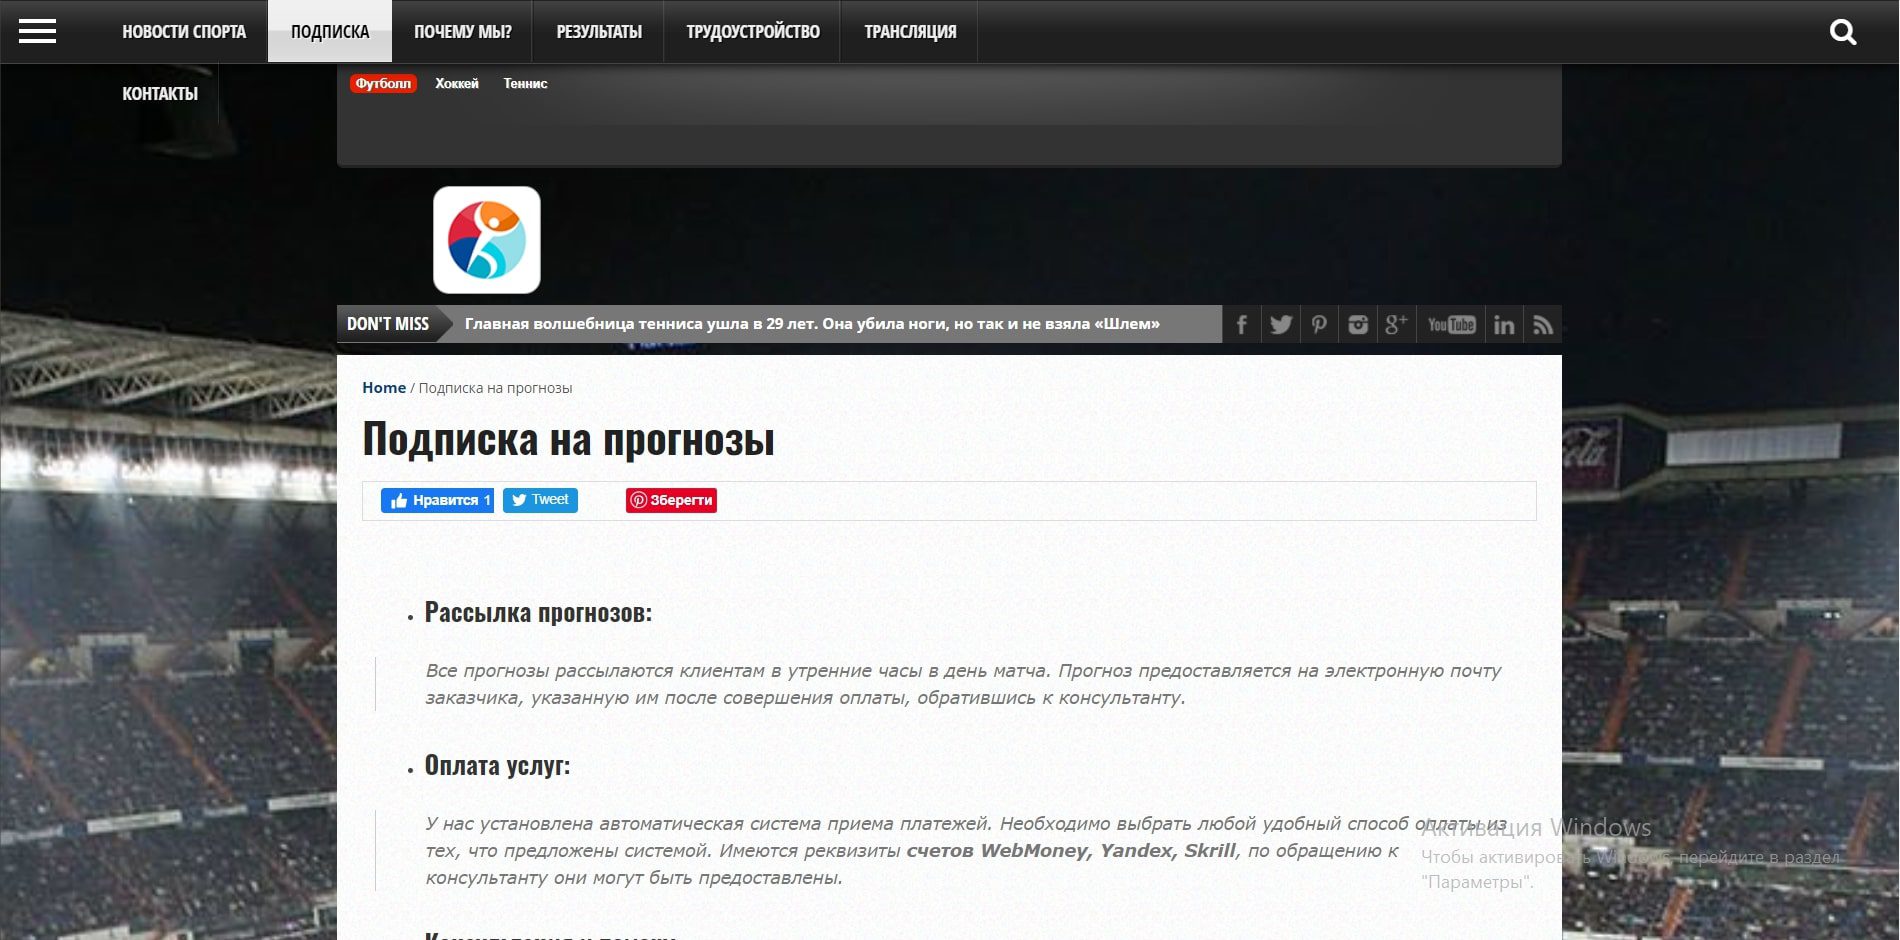 V-sporte.ru - проект по продаже прогнозов на спорт